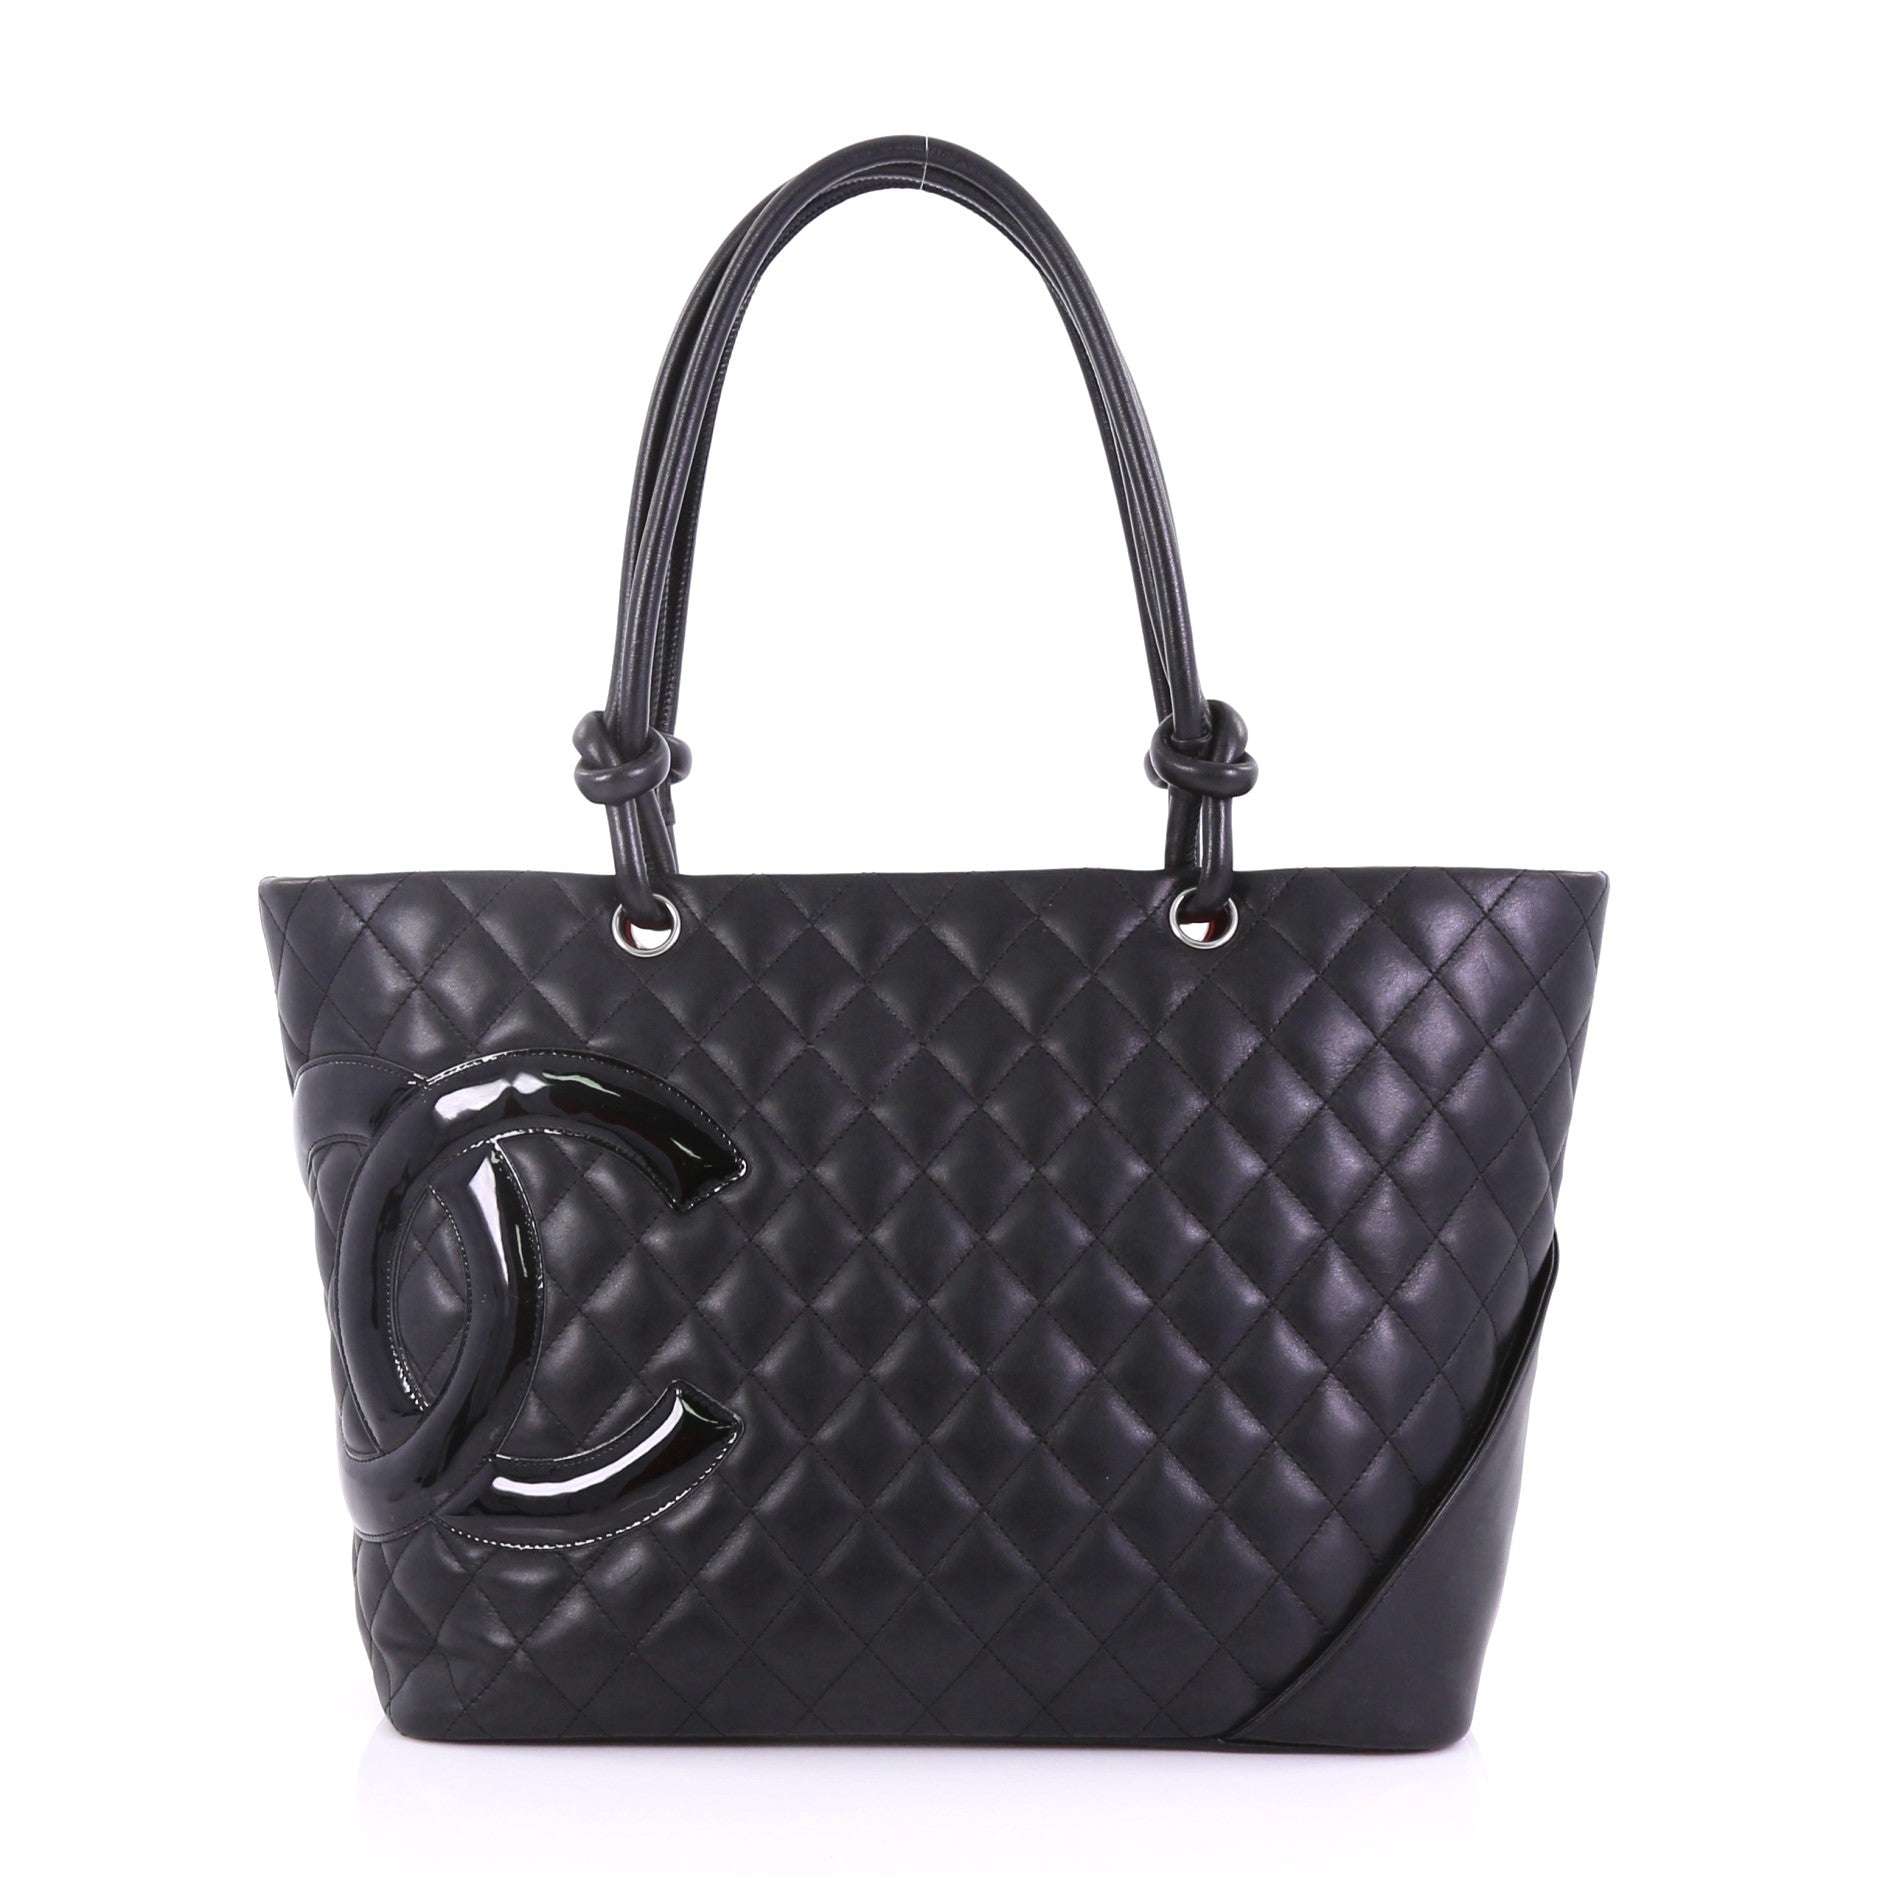 Chanel Coco Sailor Bag: Gabrielle's Inspiration